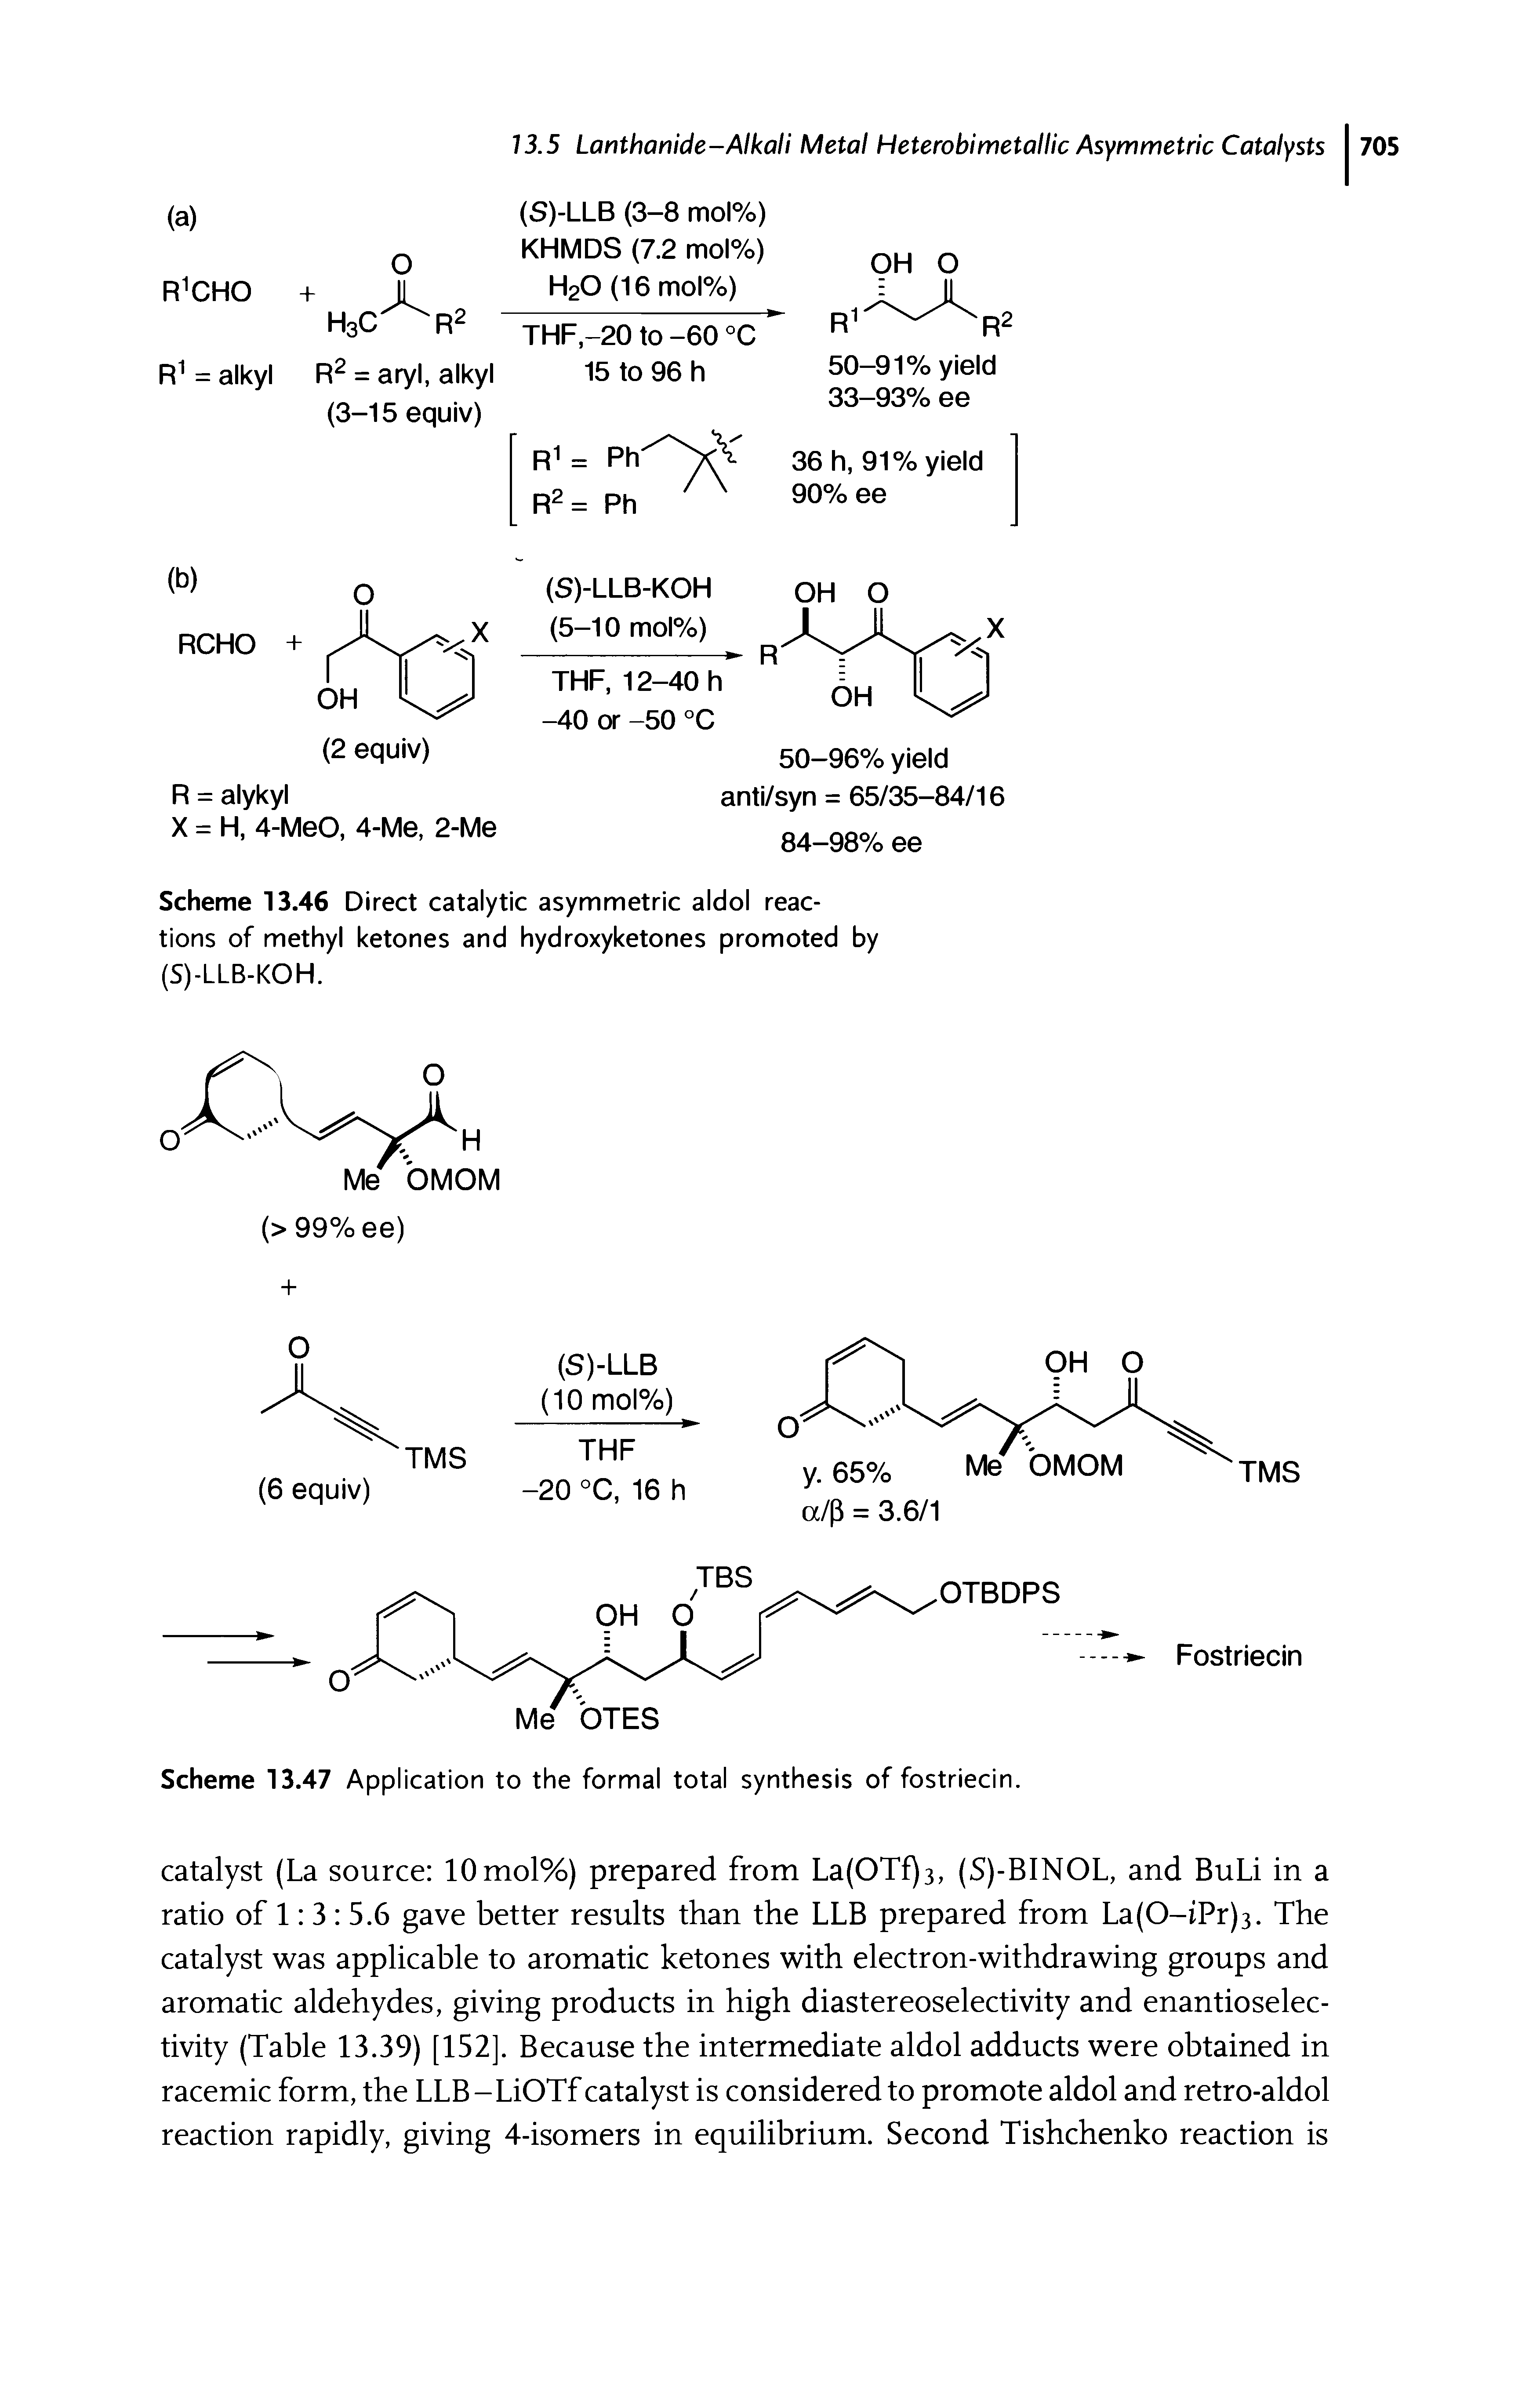 Scheme 13.46 Direct catalytic asymmetric aldol reactions of methyl ketones and hydroxyketones promoted by (S)-LLB-KOH.